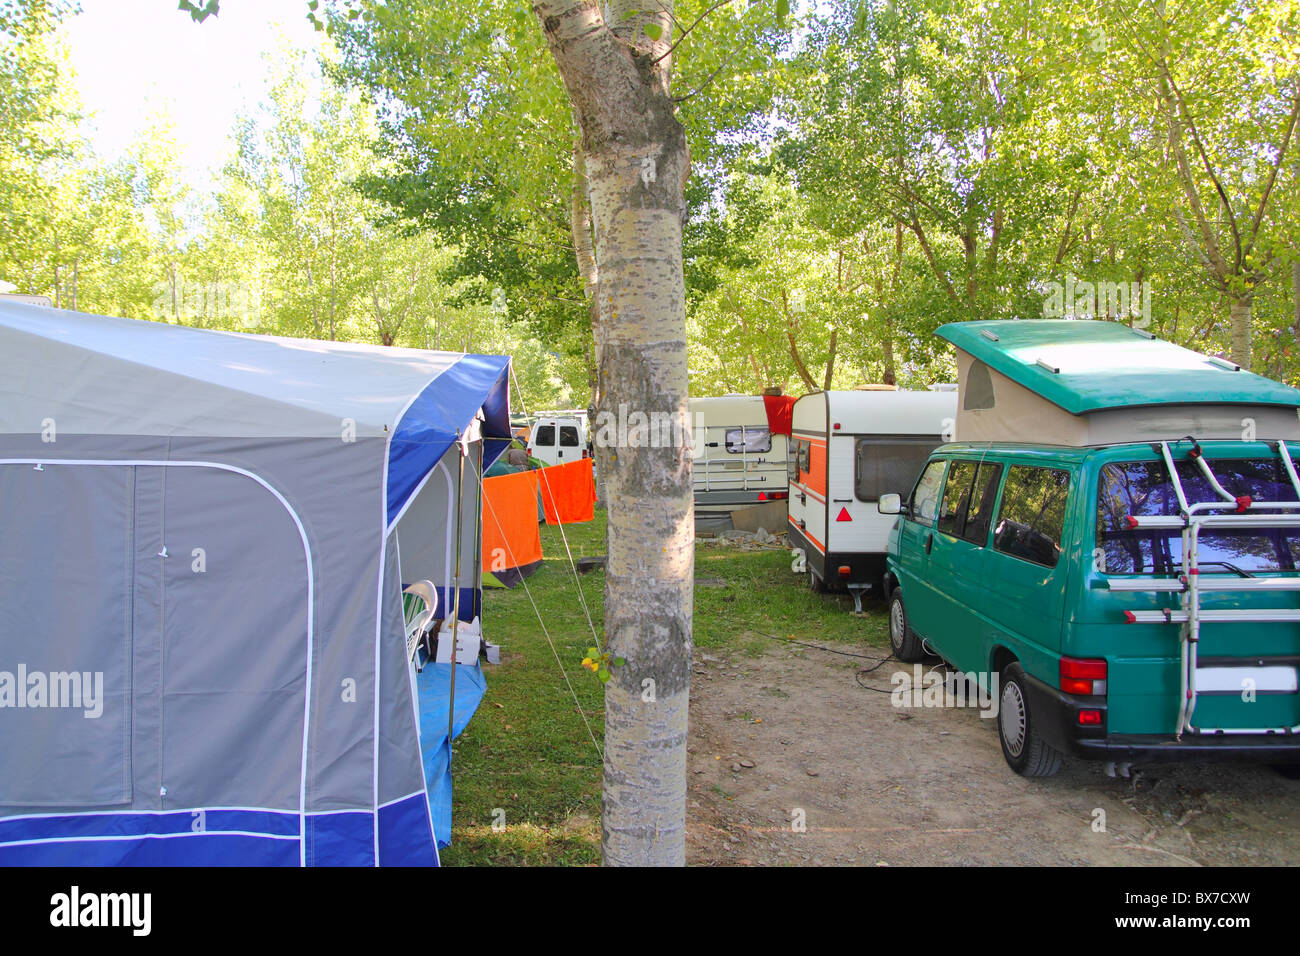 Camping tents caravan in green trees outdoor summer vacation Stock Photo